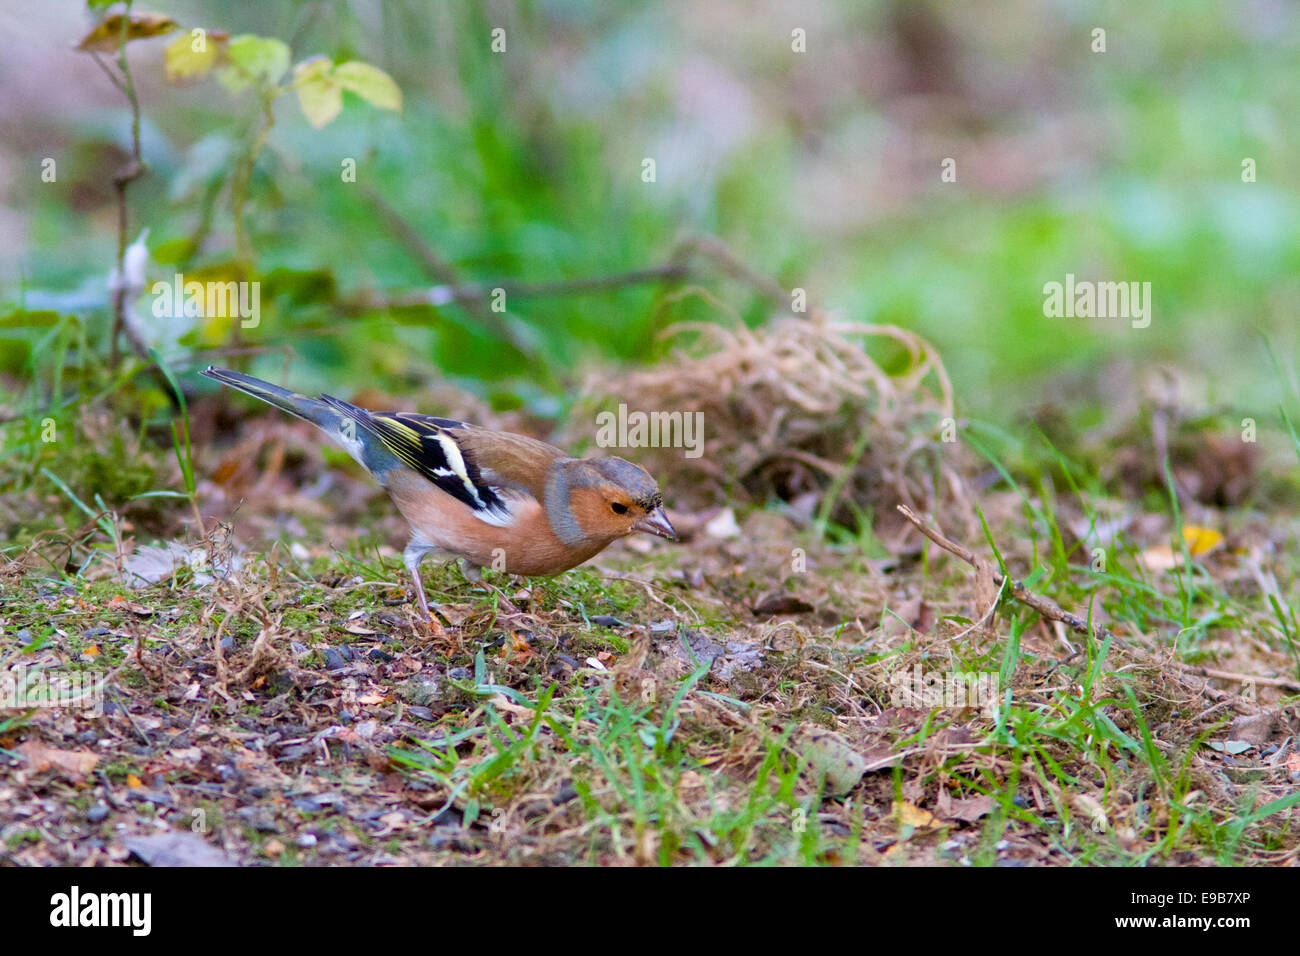 A Chaffinch (Fringilla Coelebs) in a woodland setting. Stock Photo